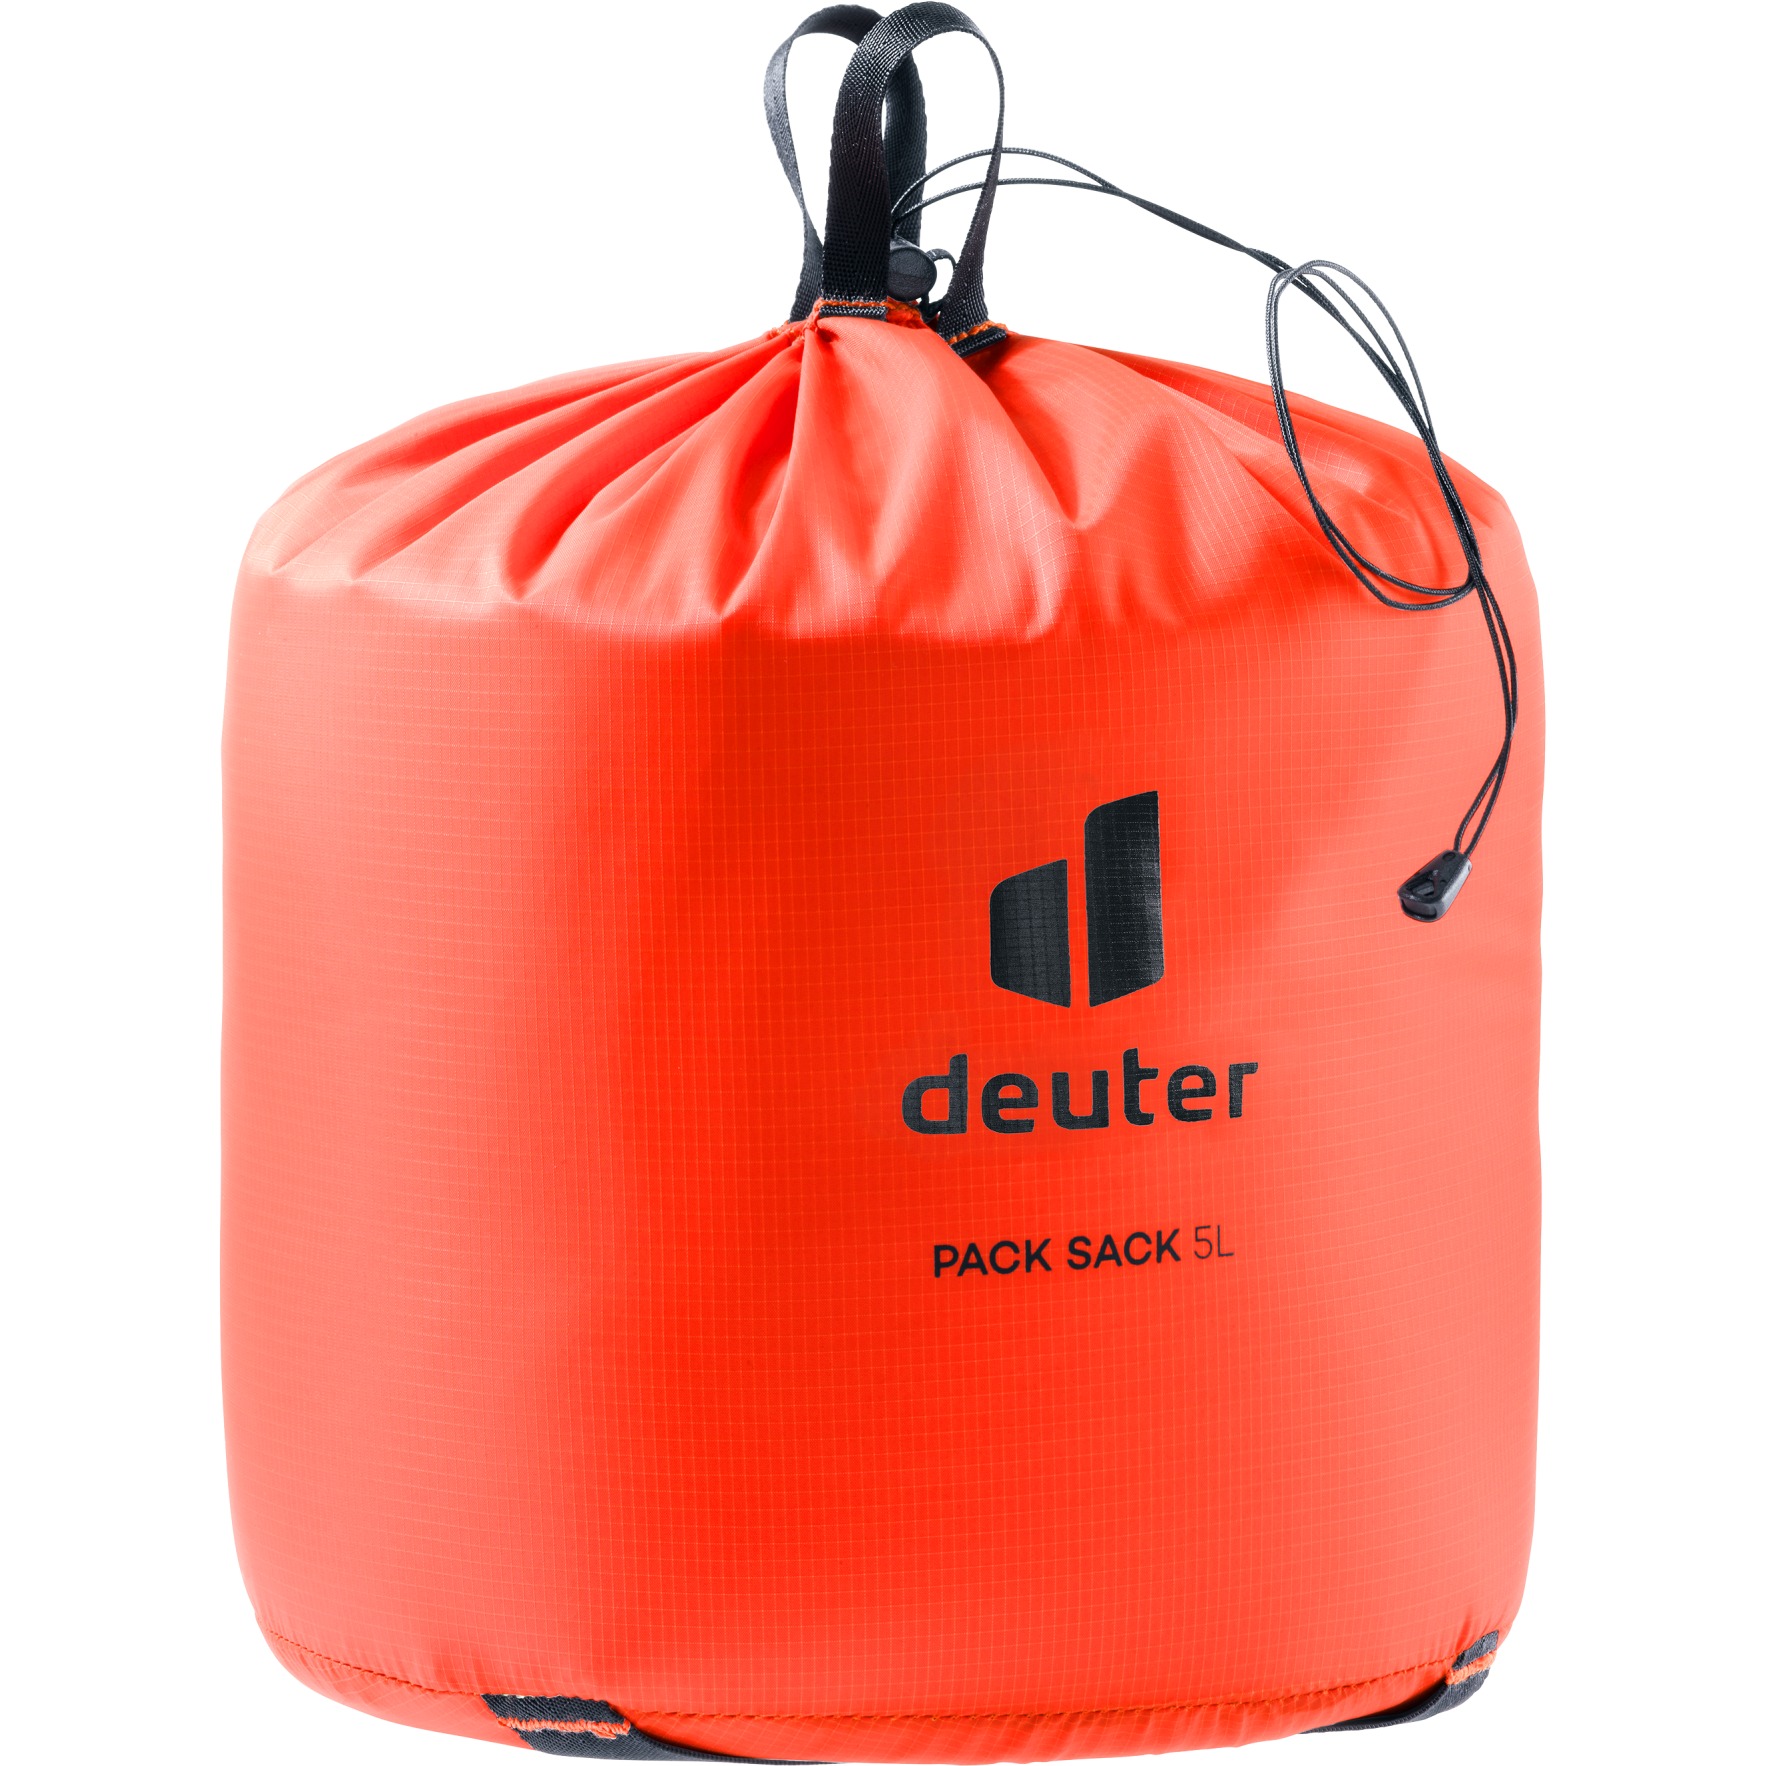 Image of Deuter Pack Sack 5L - papaya